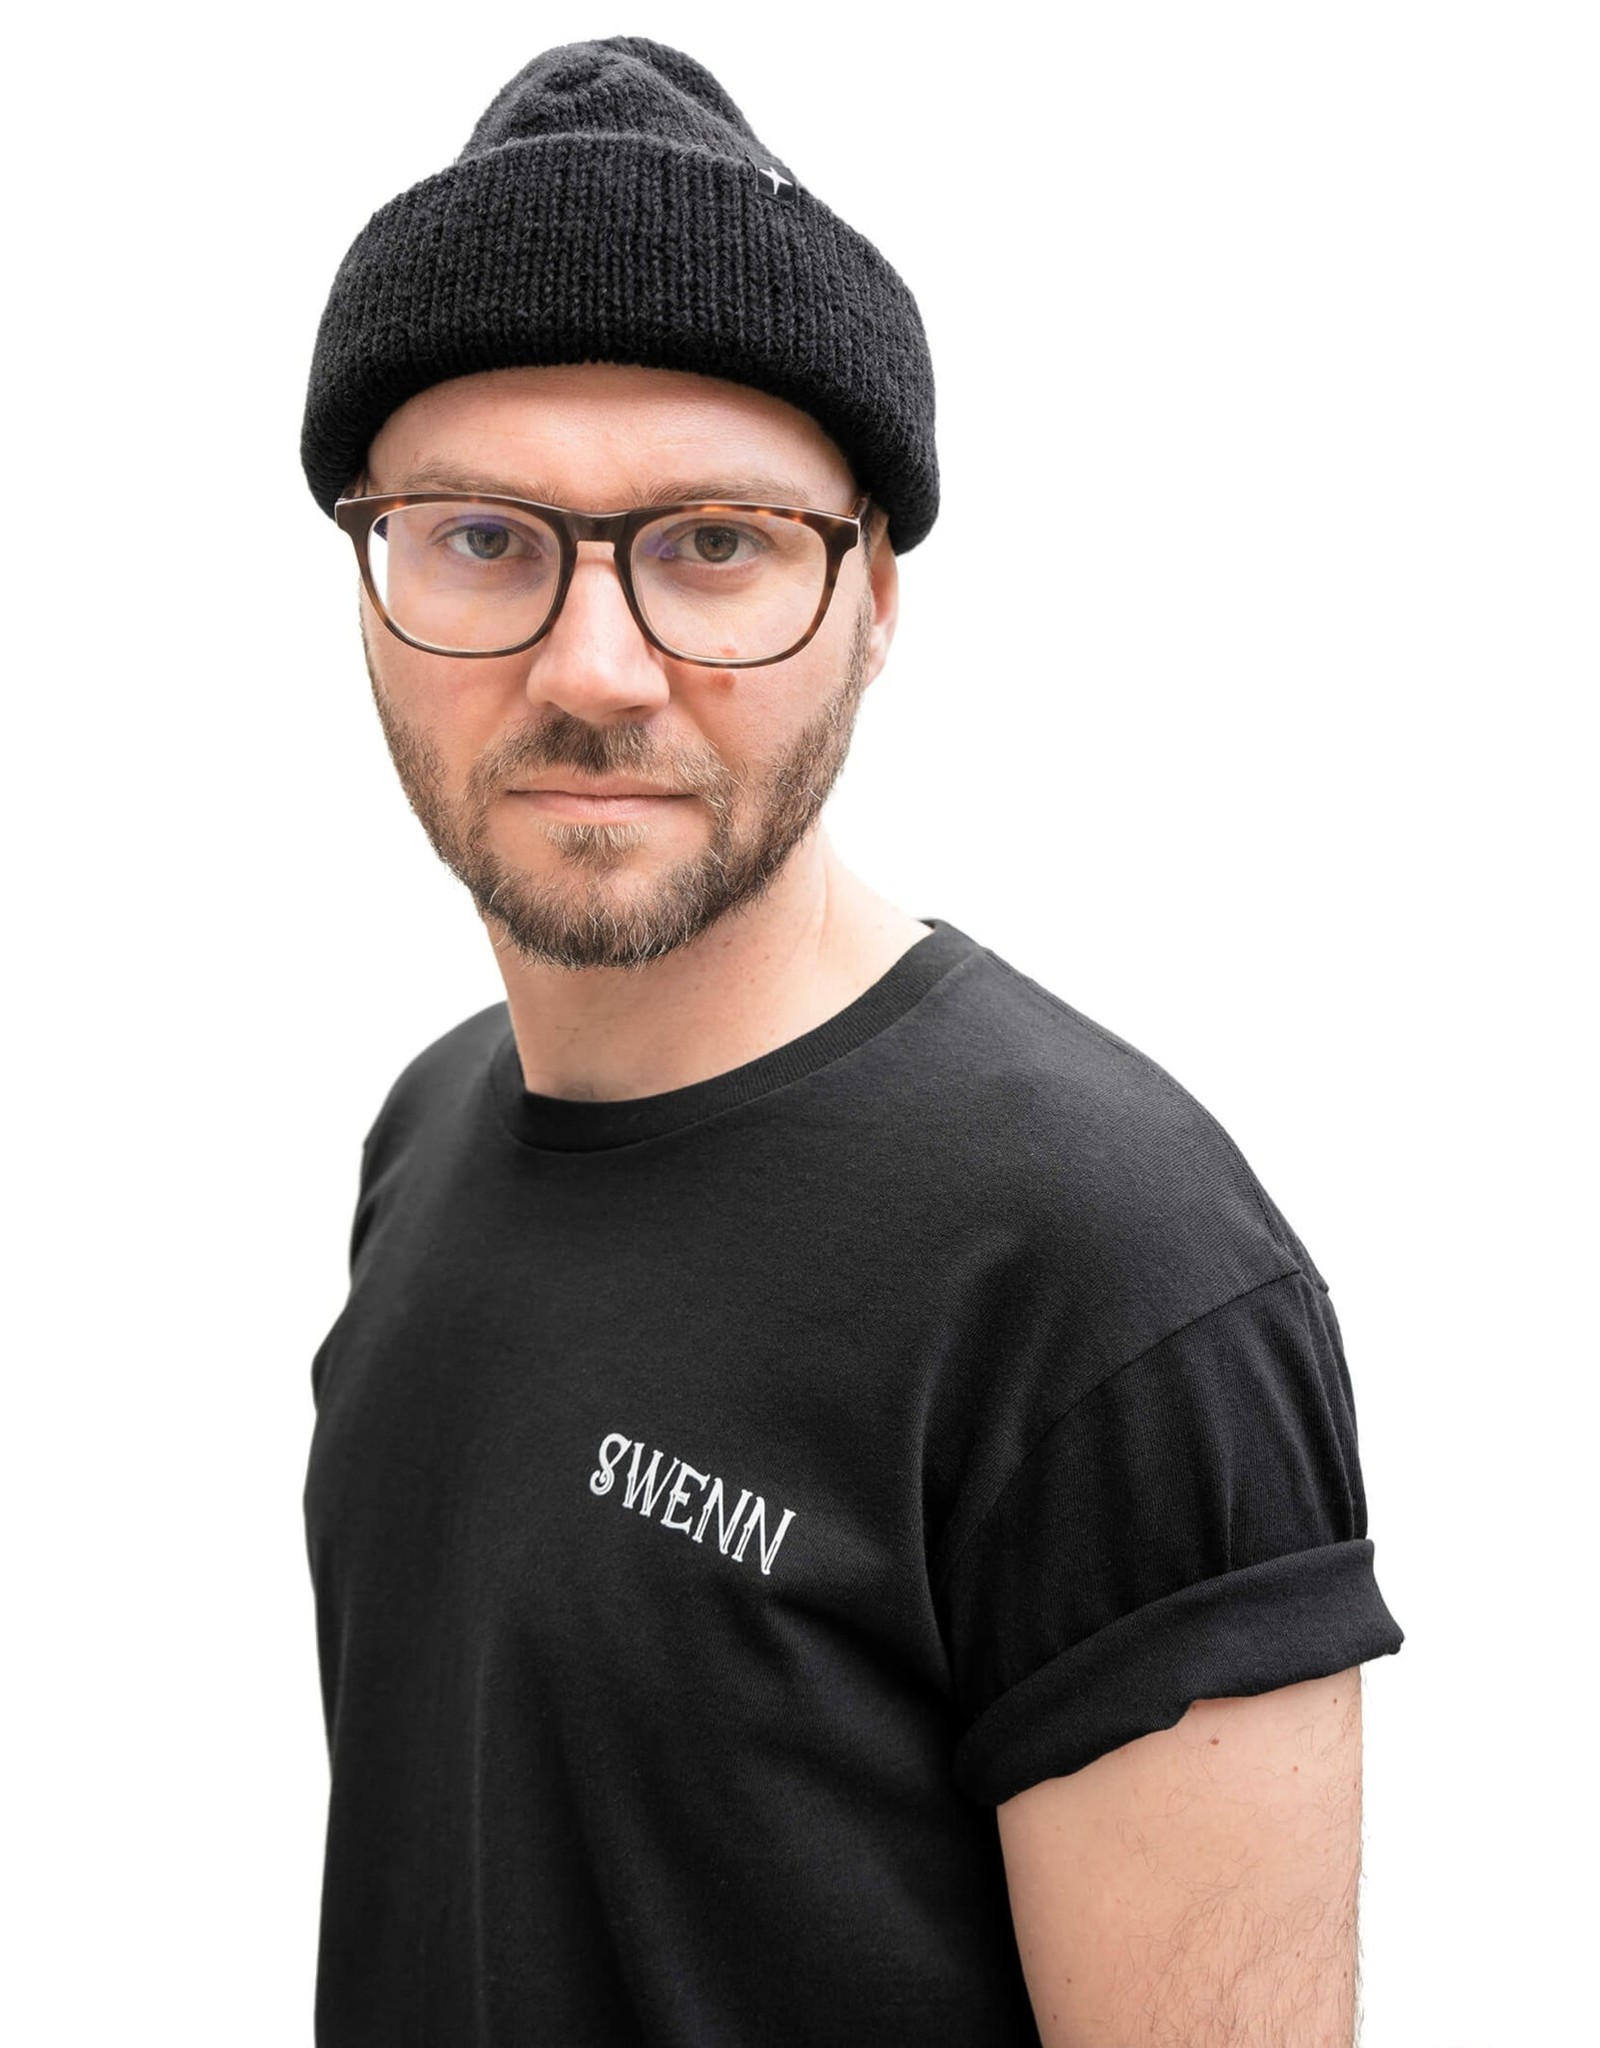 Swenn T-shirt unisexe Sirène Noir